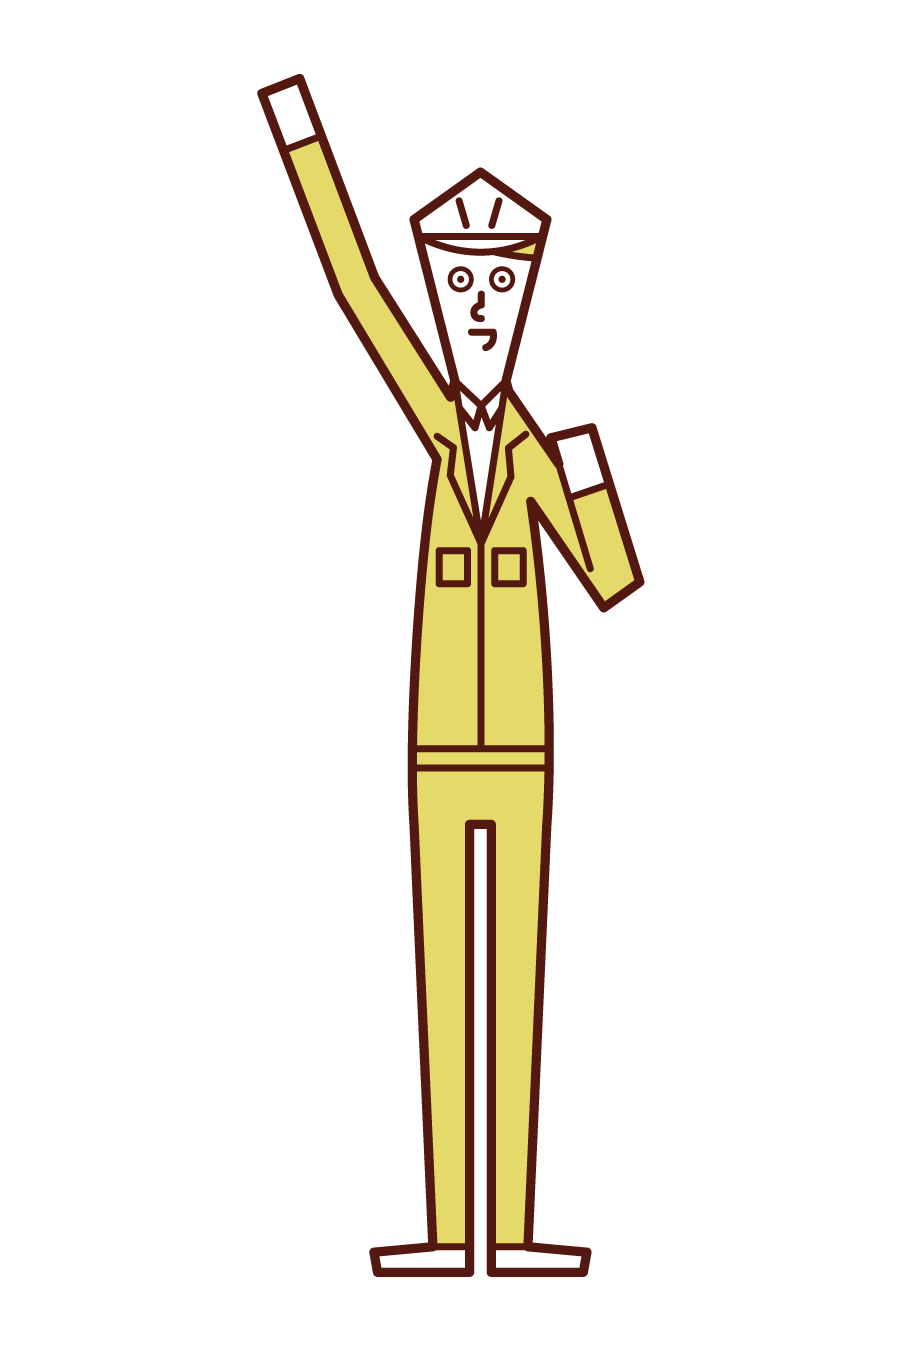 Illustration of Aei-oh (man), a field supervisor who raises his fist high